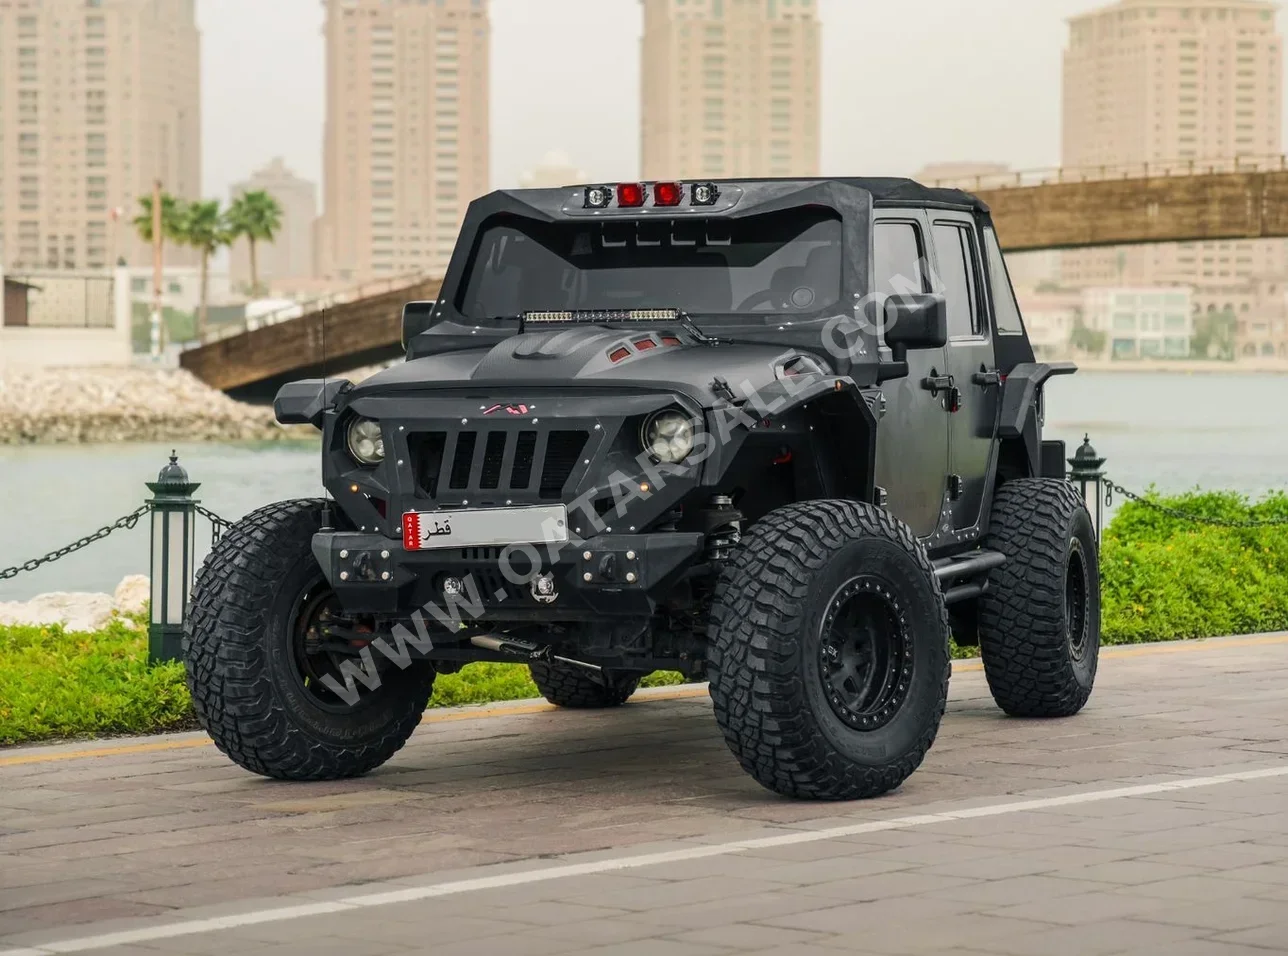 Jeep  Wrangler  Sahara  2014  Automatic  70,000 Km  6 Cylinder  Four Wheel Drive (4WD)  SUV  Black